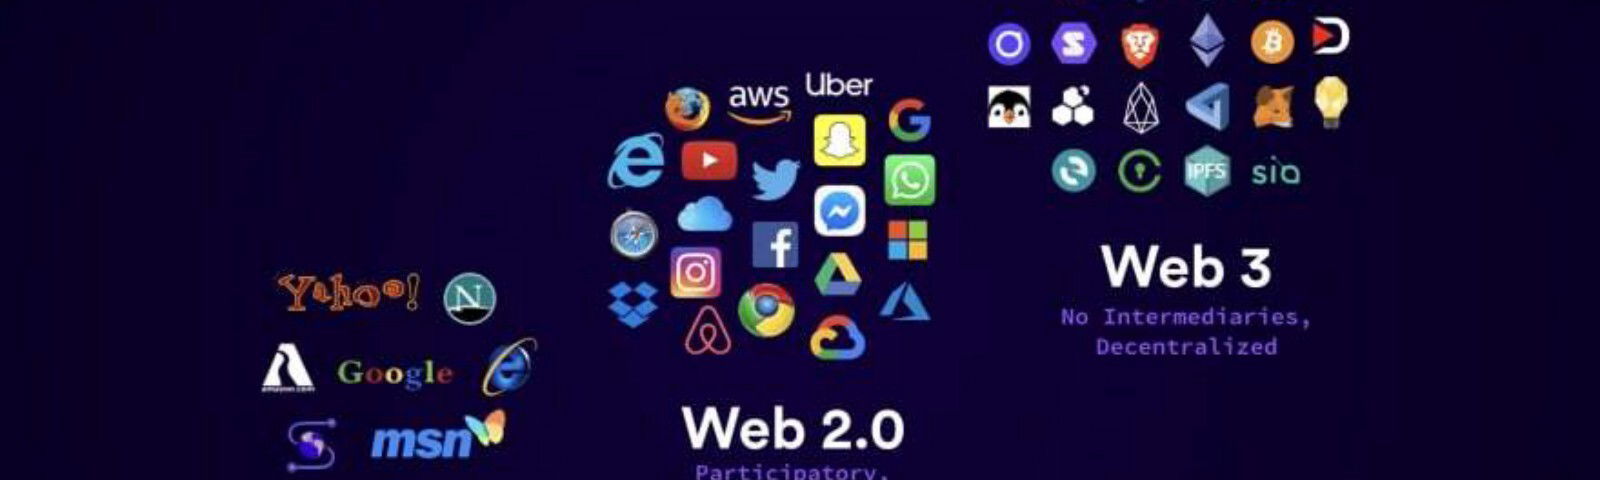 Why do we need Web 3.0?